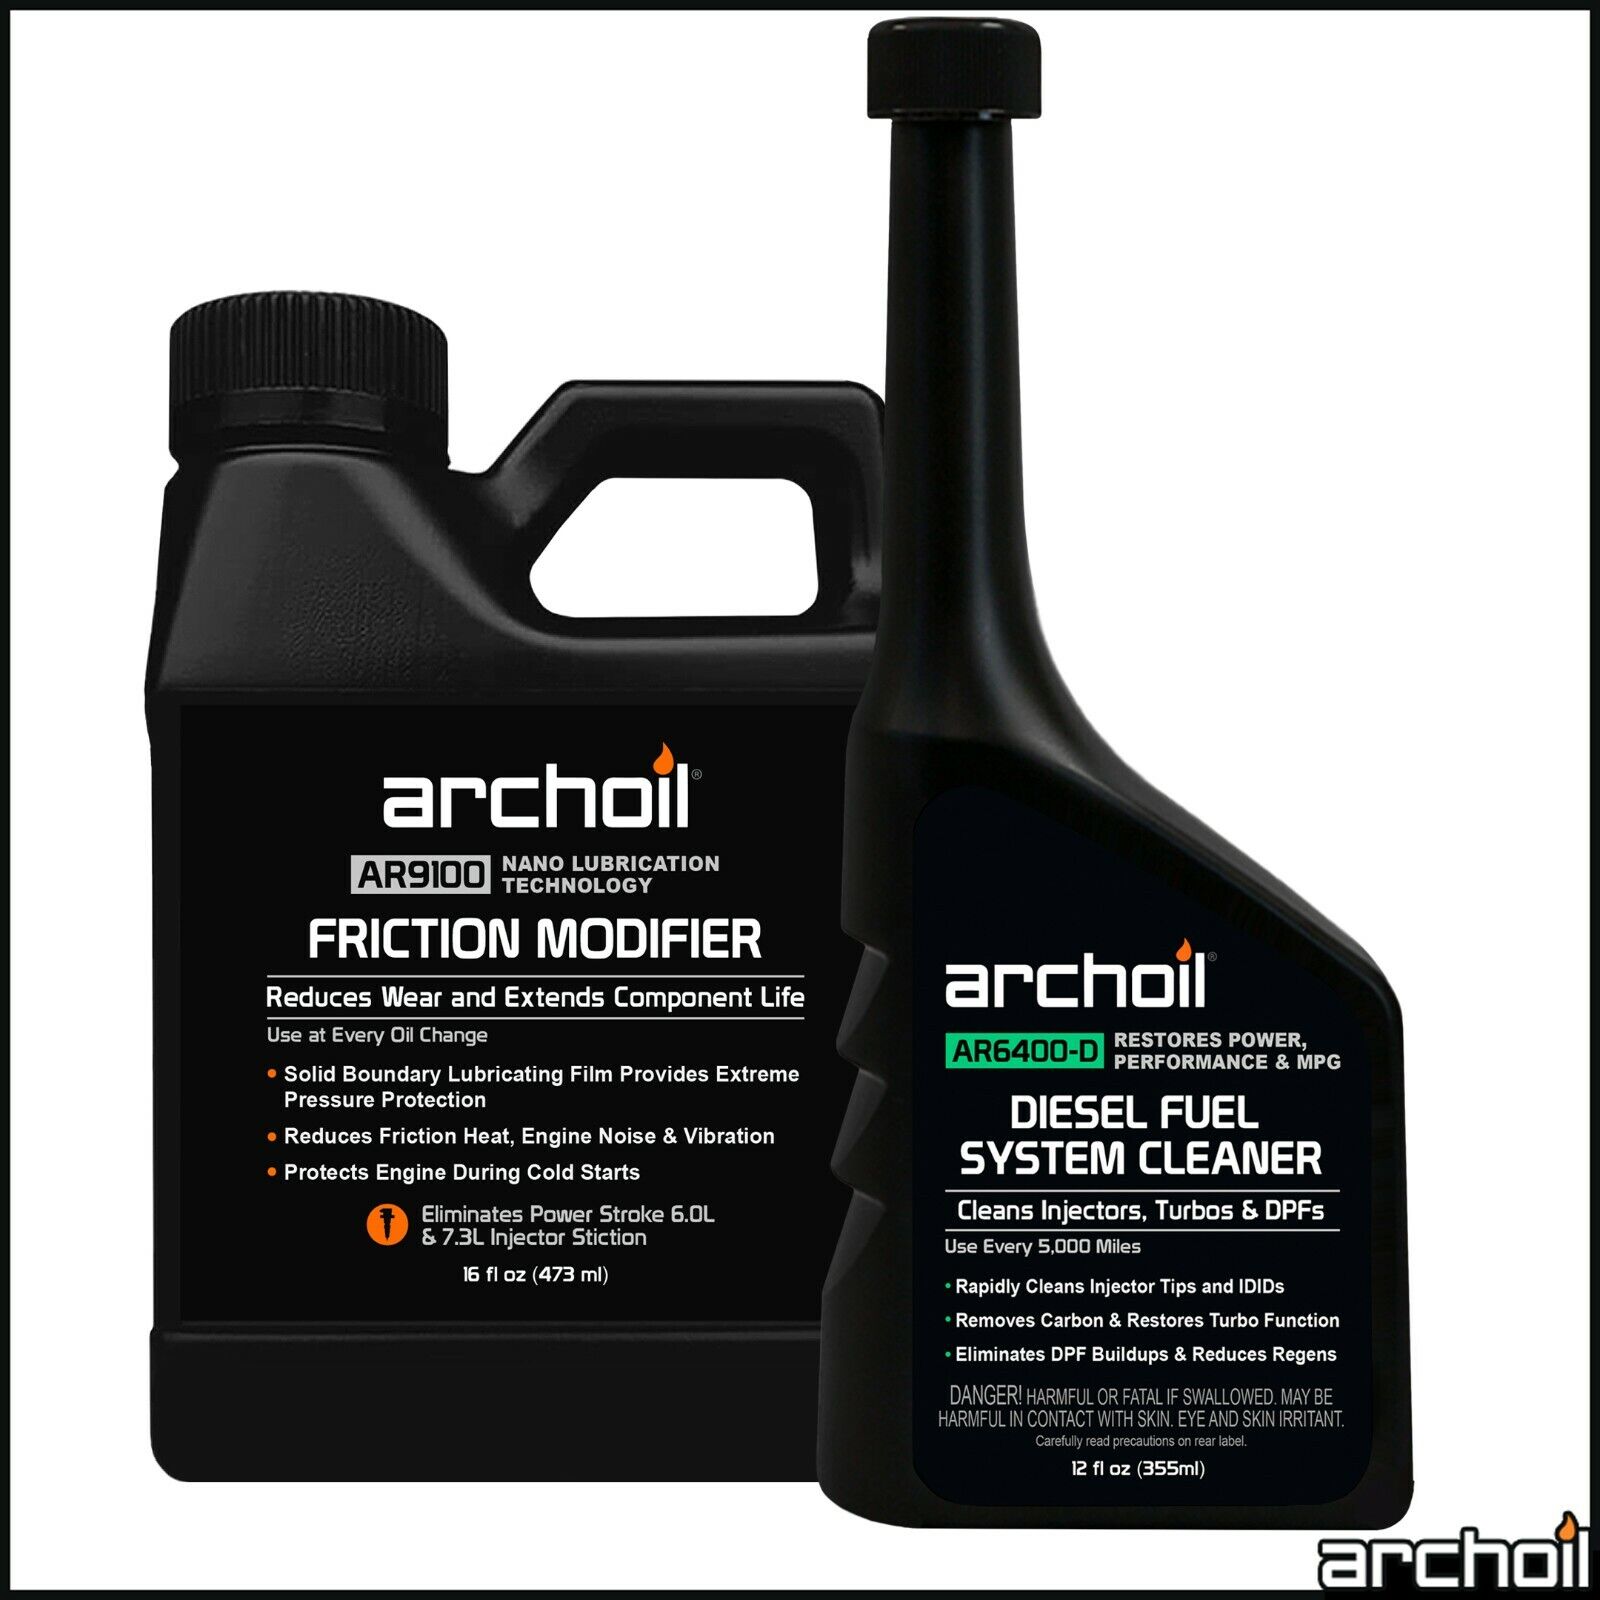 Archoil Special Offer Kit - AR9100 + AR6400-D Diesel Fuel System Cleaner